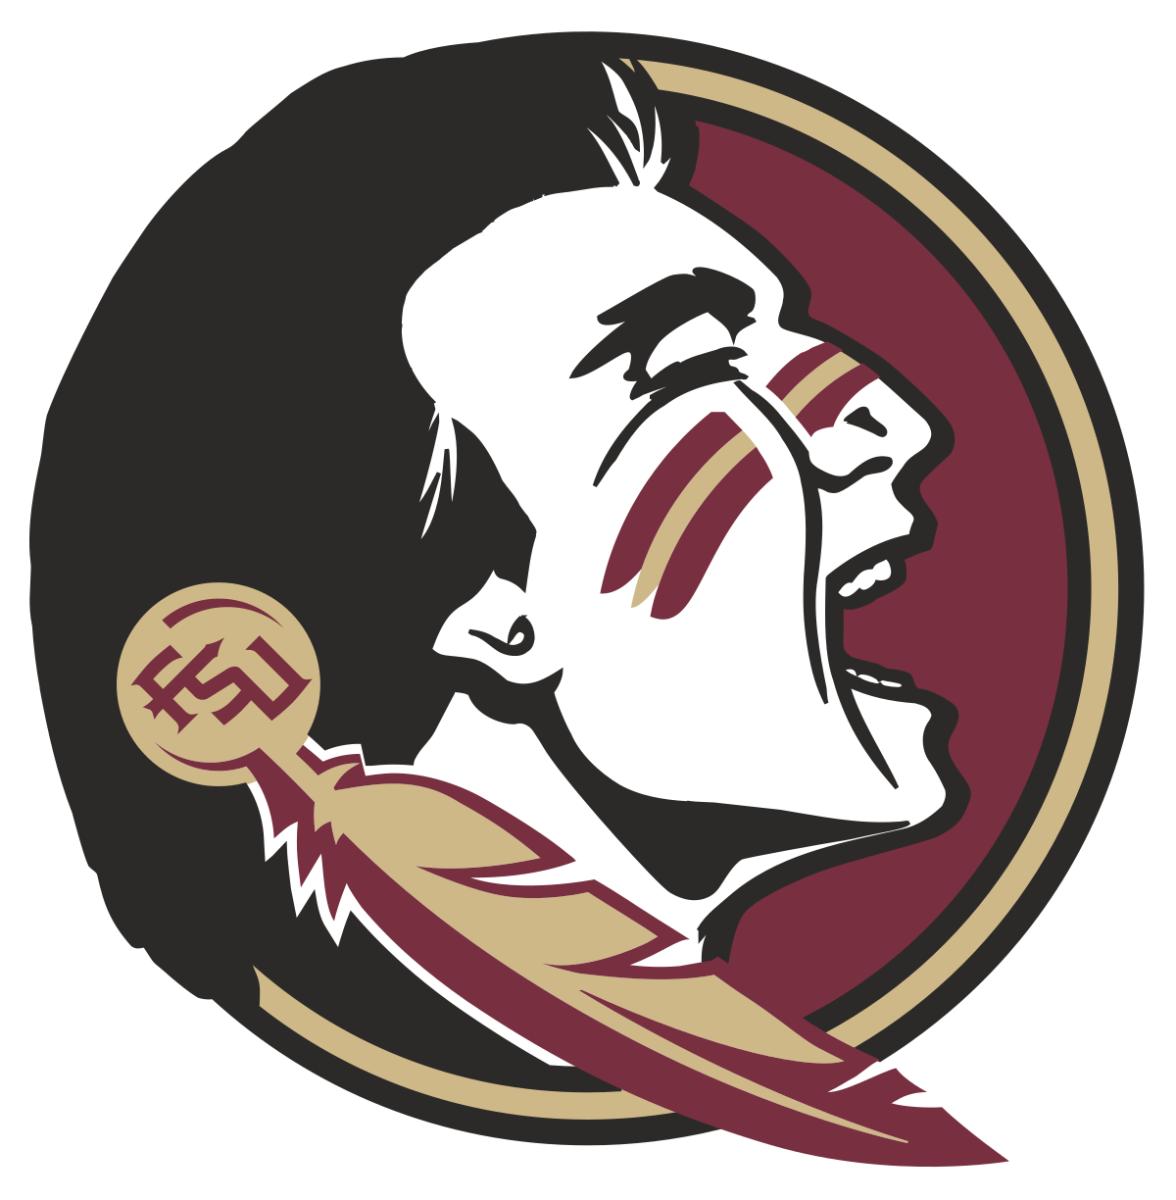 Florida_State_Seminoles_logo.svg